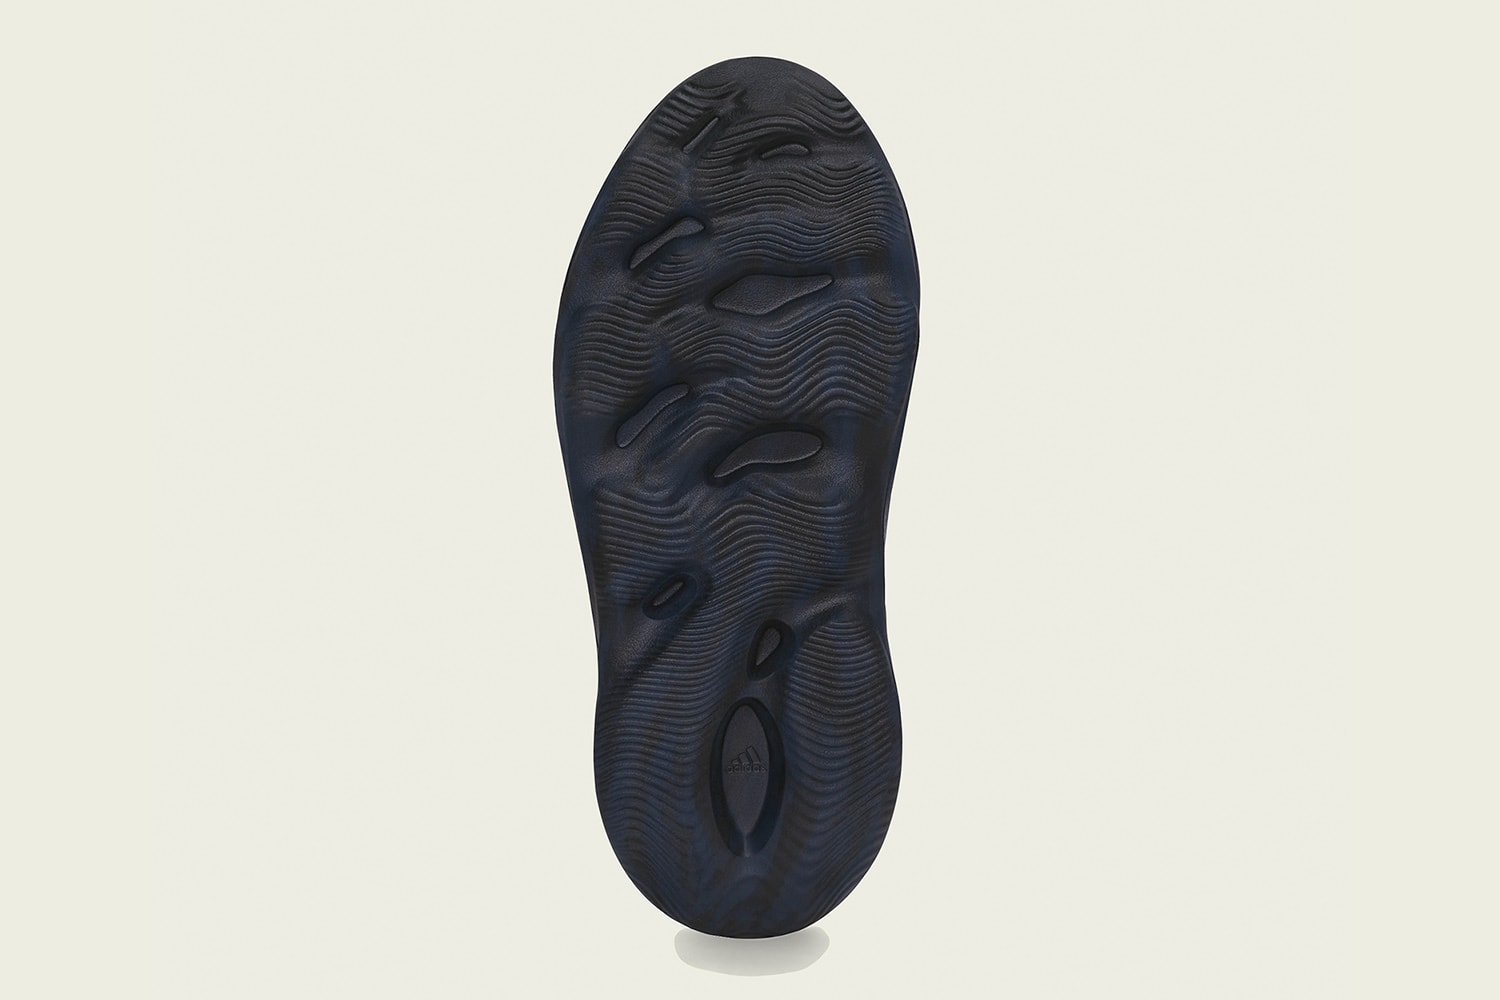 adidas 人氣鞋款 YEEZY FOAM Runner 最新配色「Mineral Blue」發售情報公開